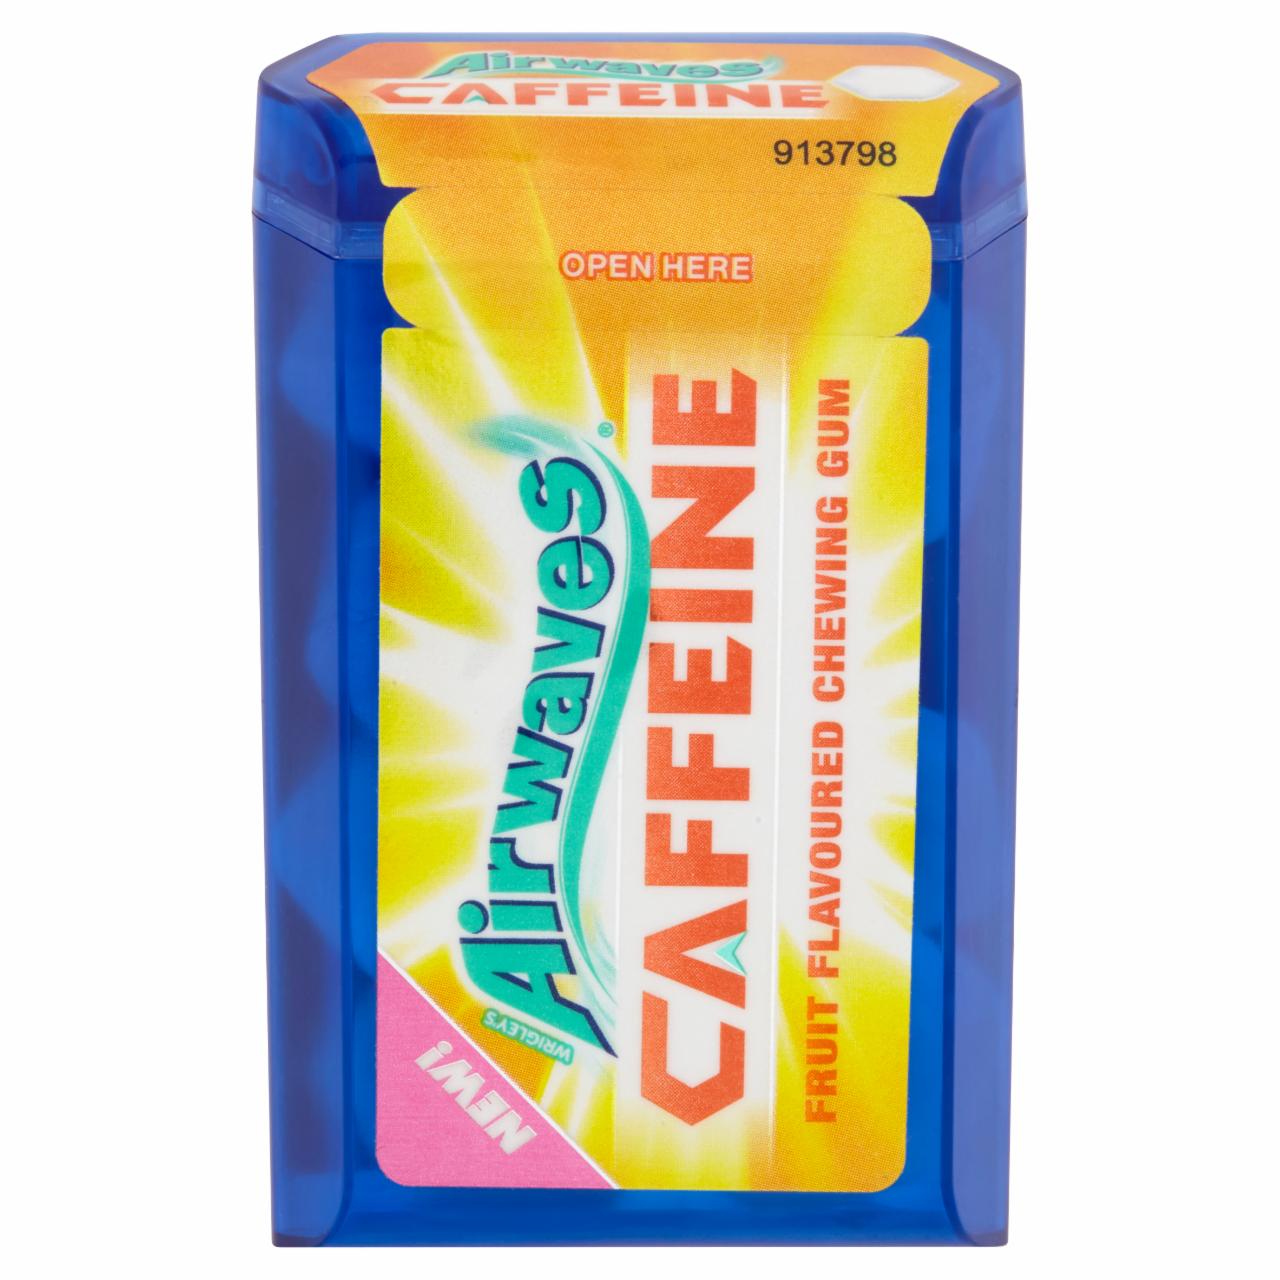 Képek - Airwaves Caffeine gyümölcsízű rágógumi koffeinnel 18,8 g